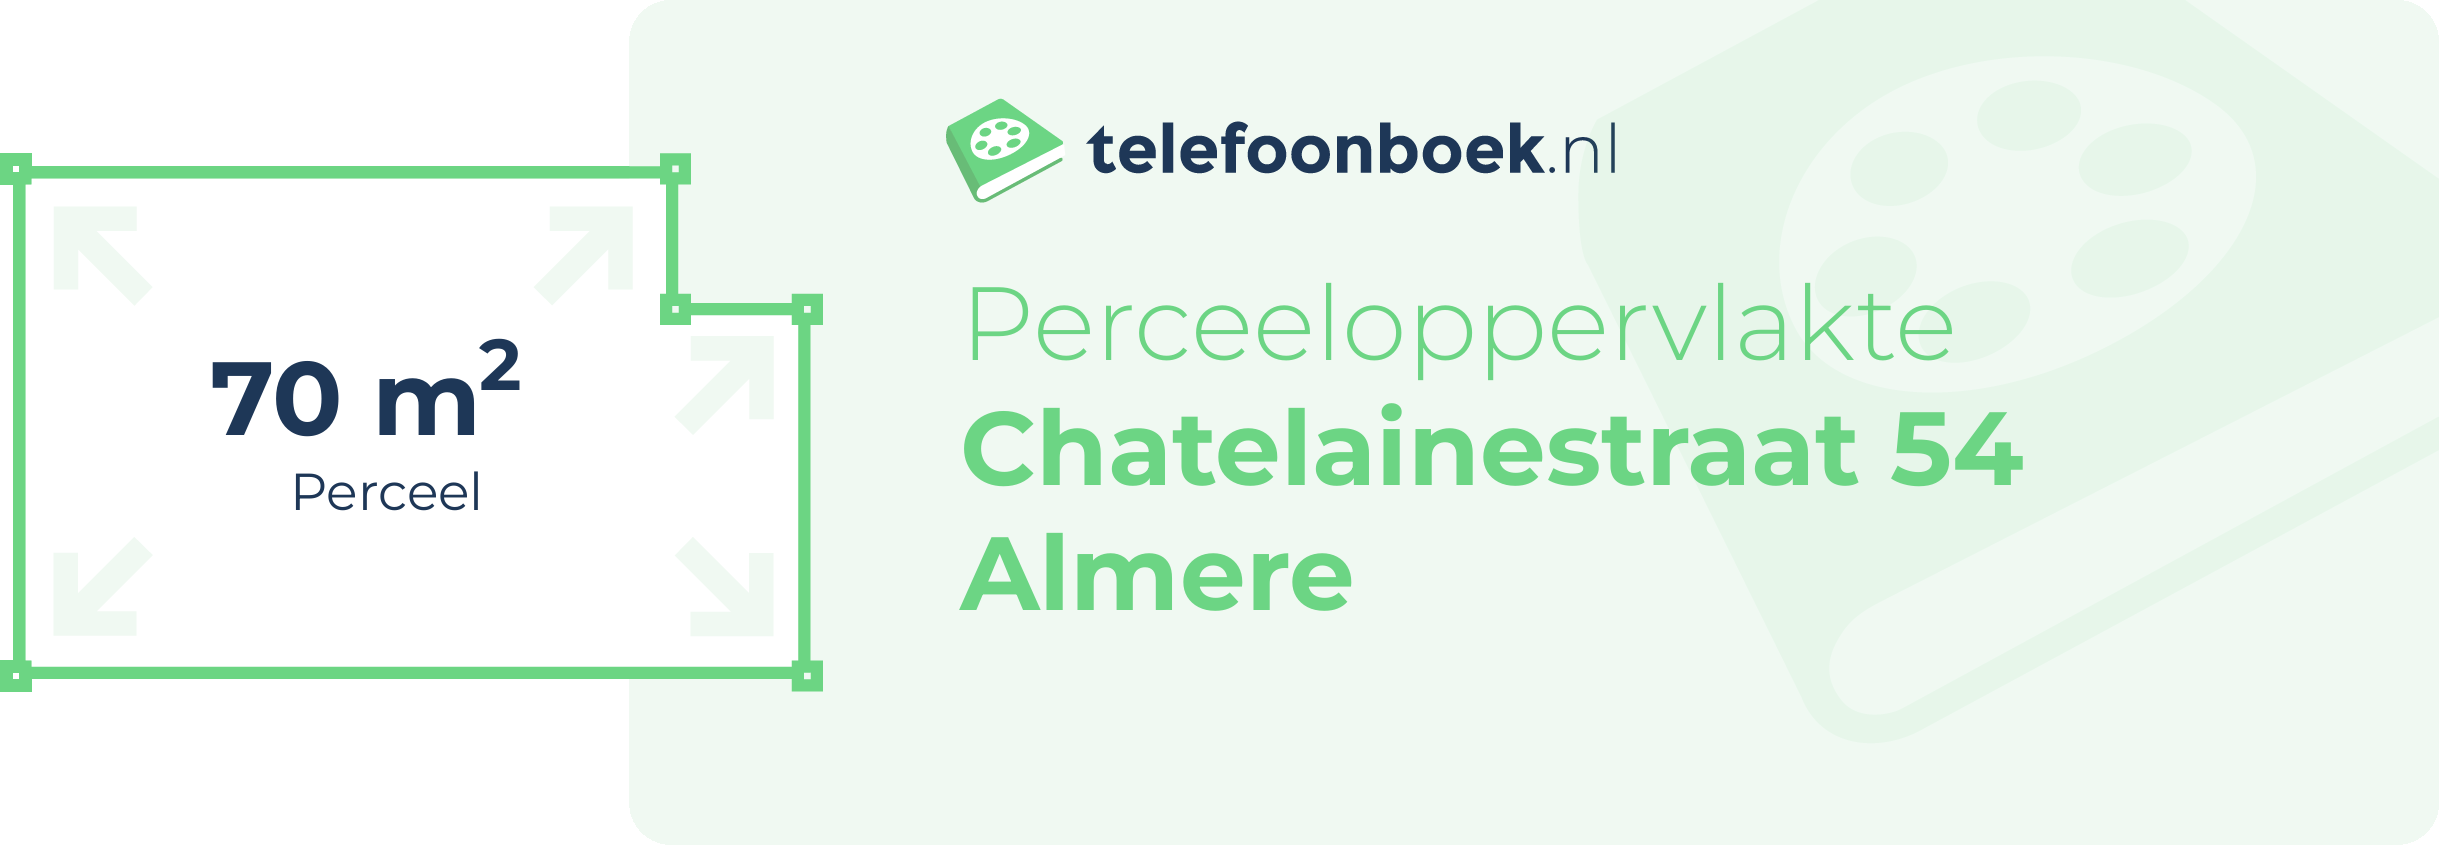 Perceeloppervlakte Chatelainestraat 54 Almere